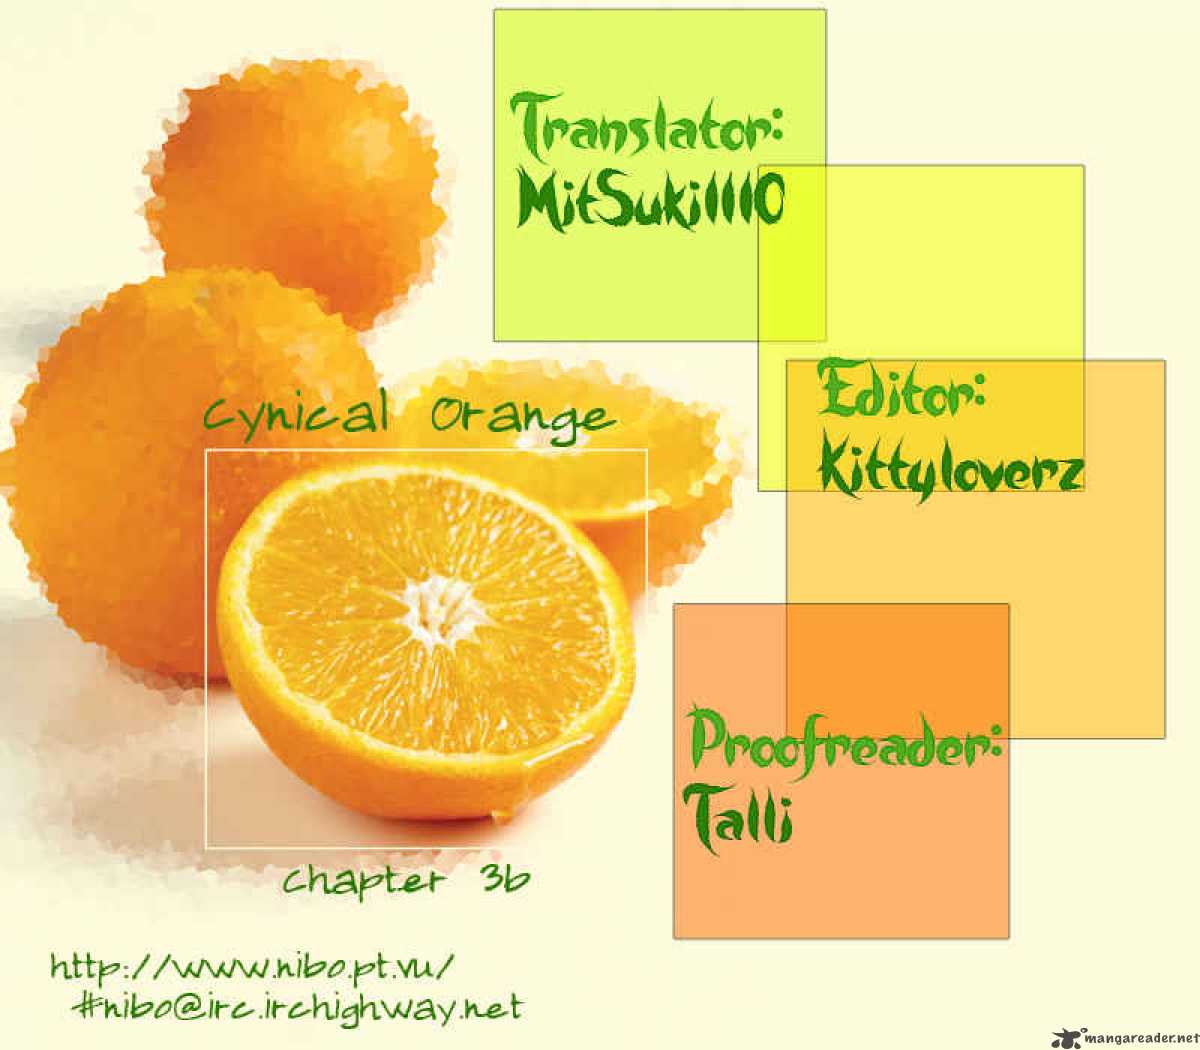 Cynical Orange 3 28